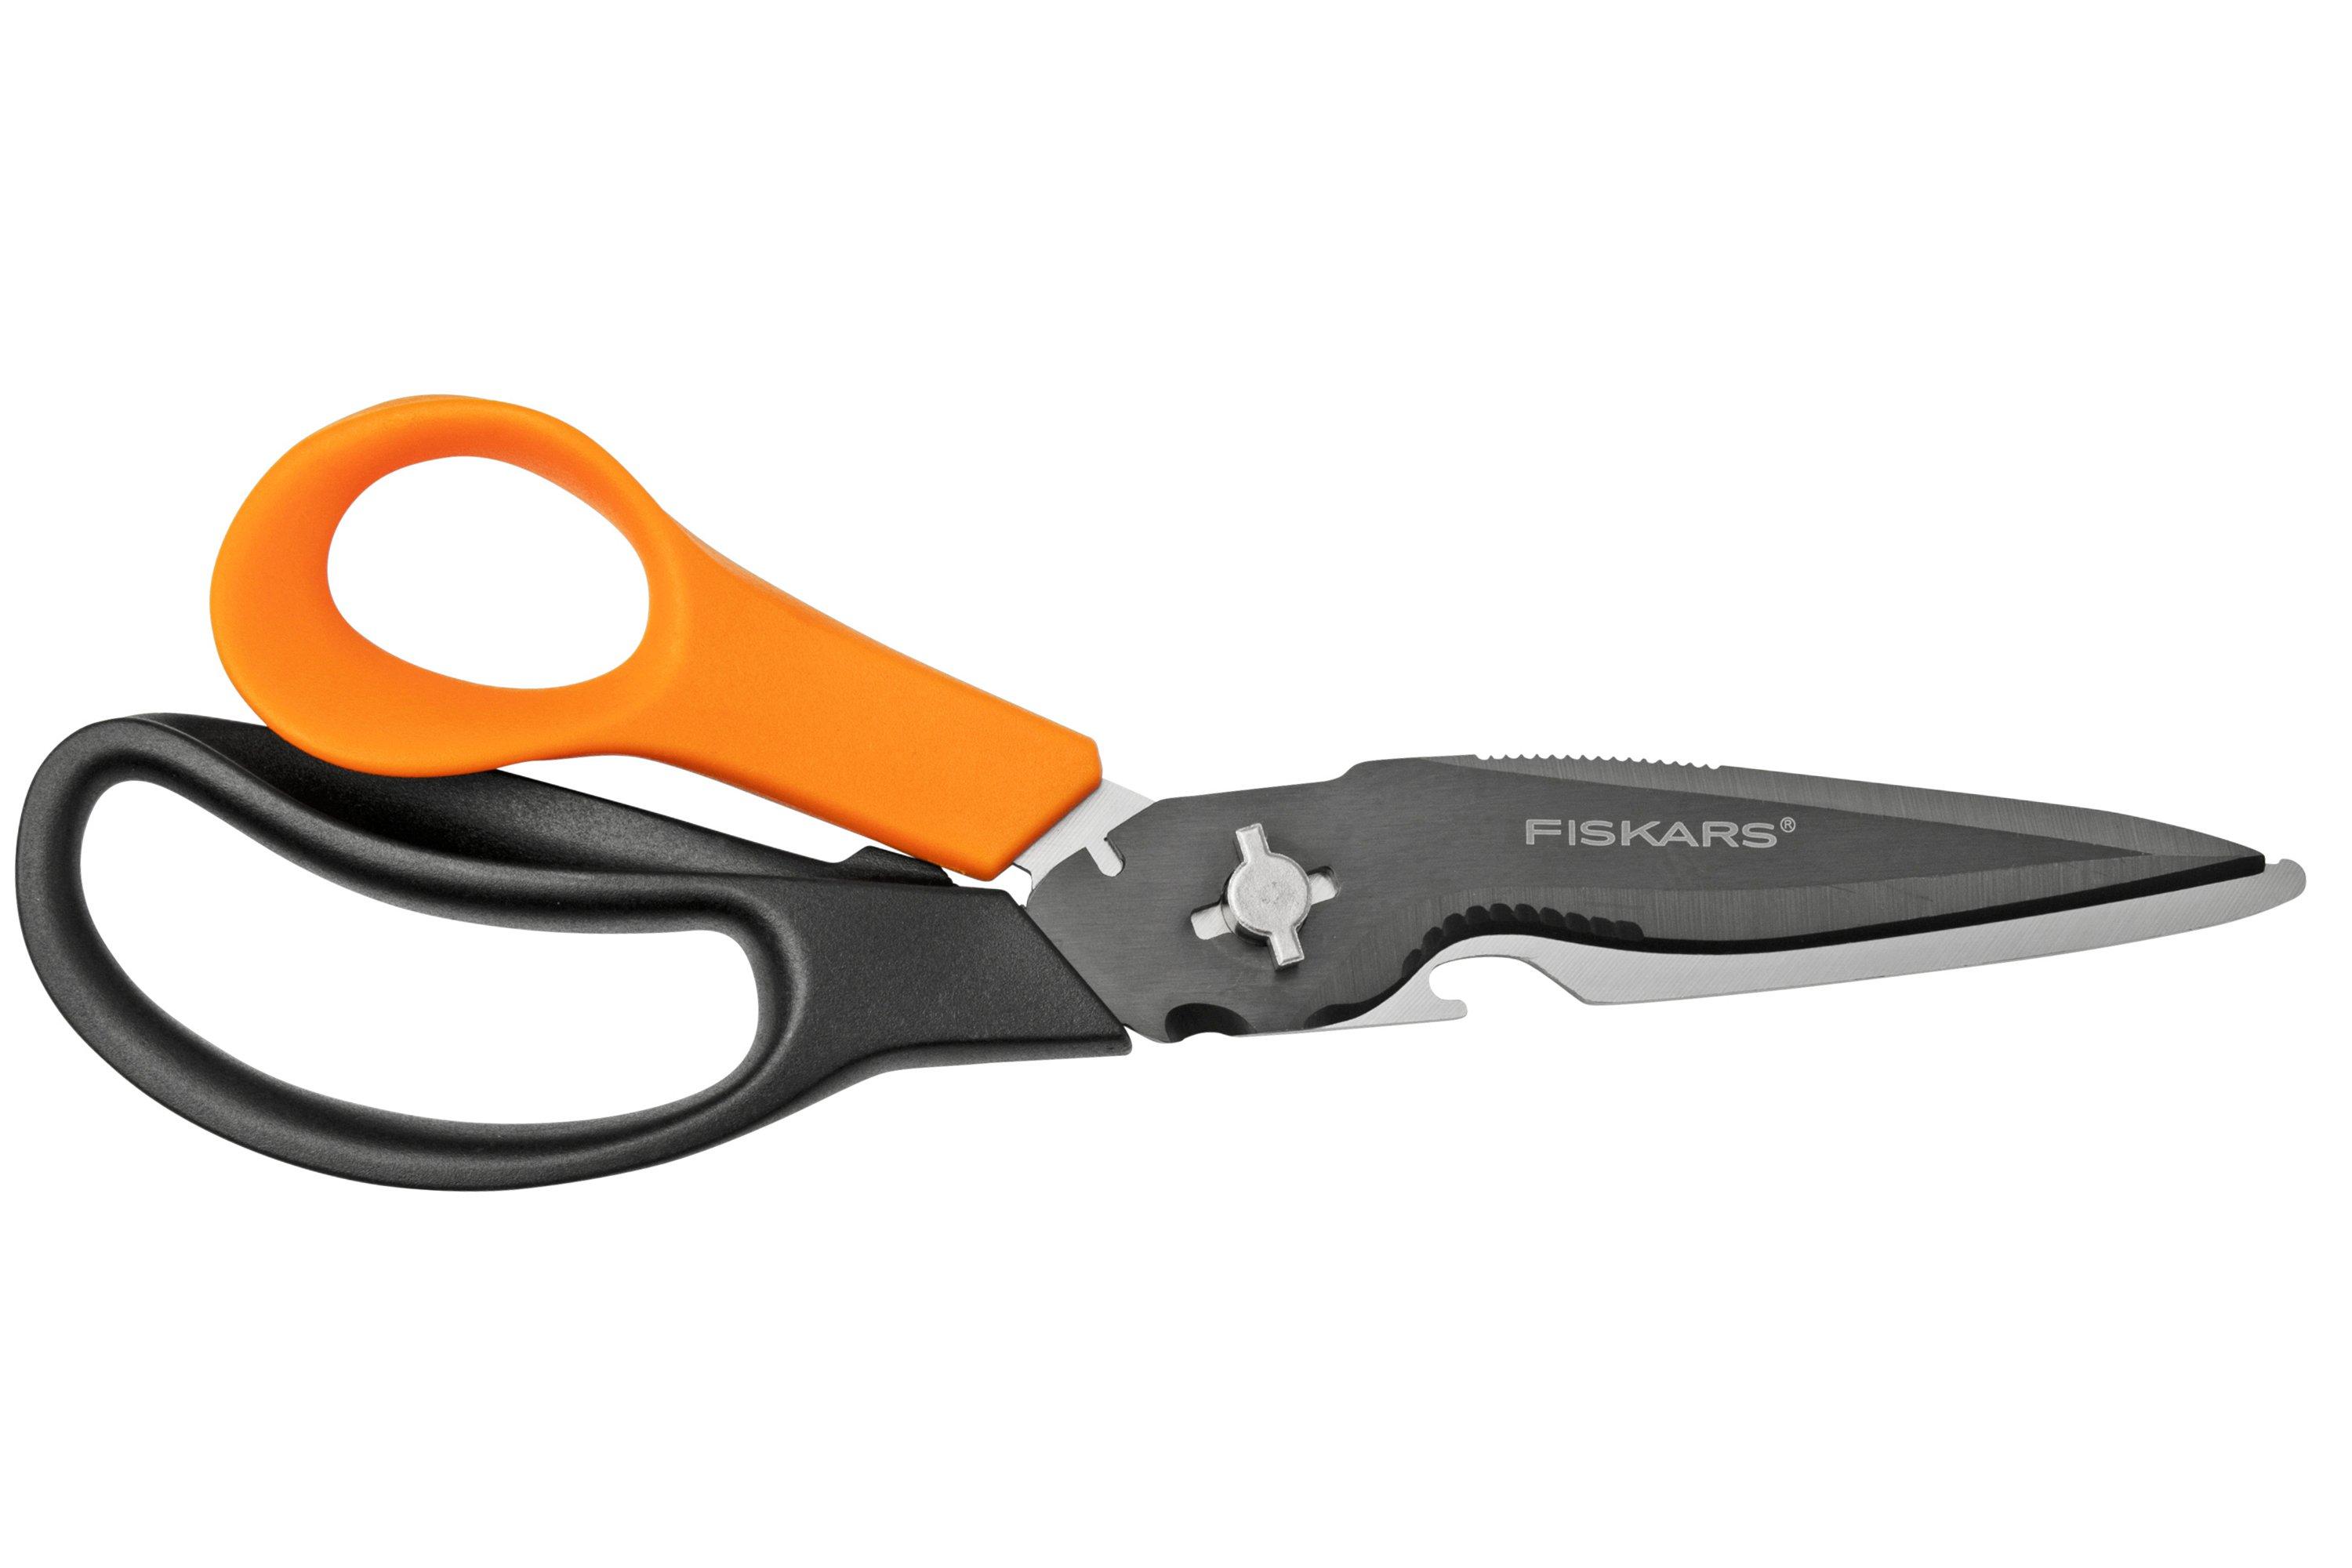 Supor - Home & Kitchen Scissors / Shears - Plain Blade - Multi